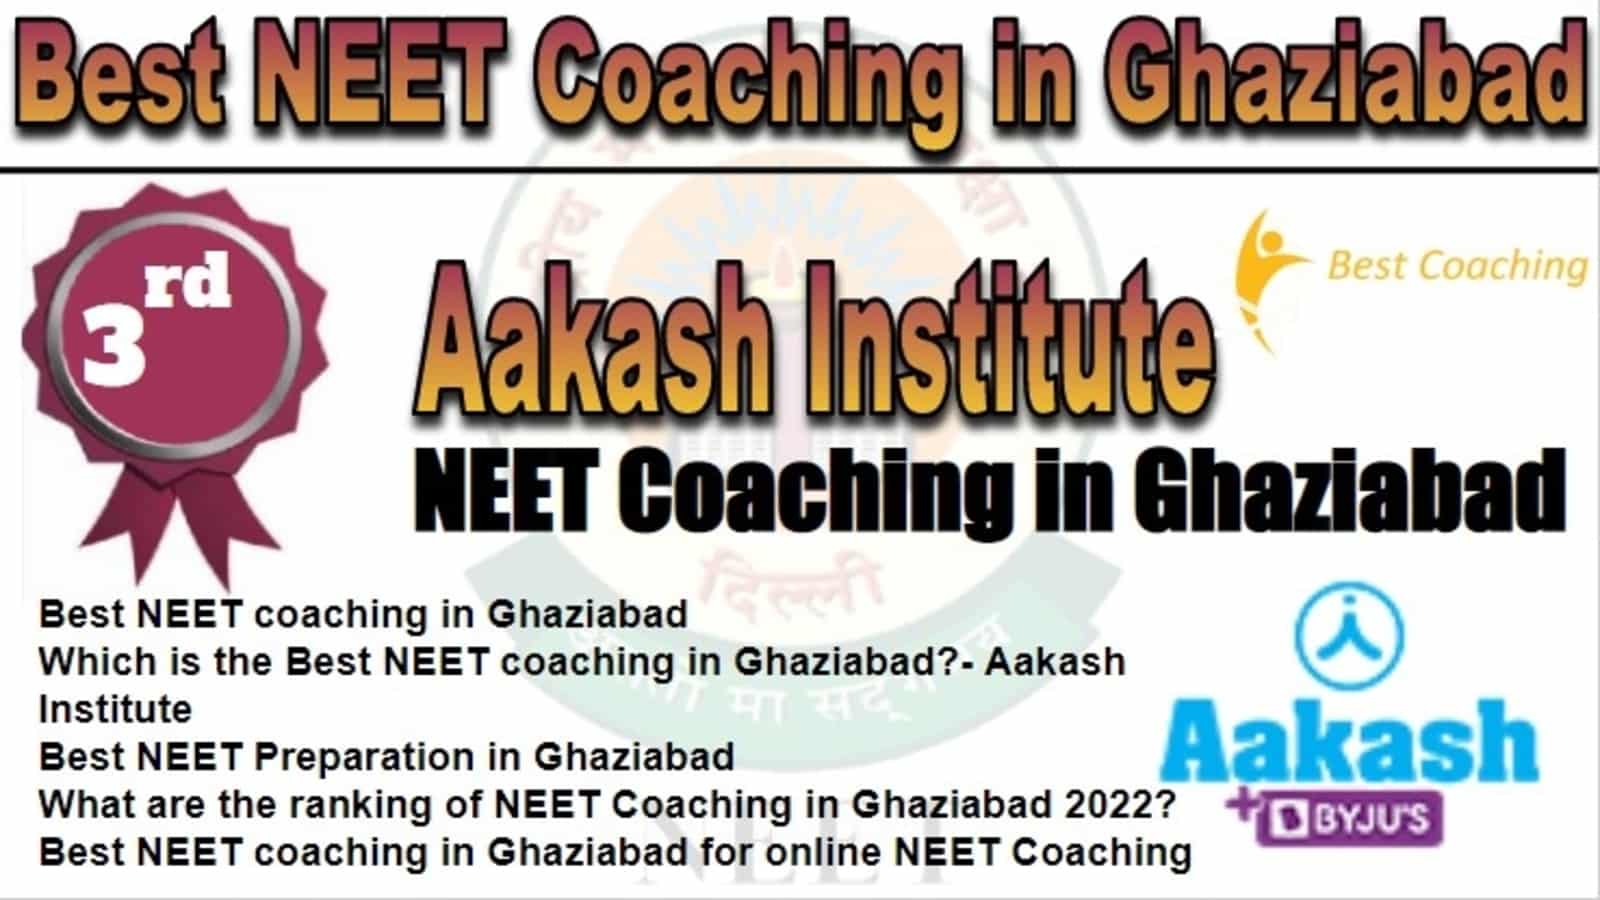 Rank 3 Best NEET Coaching in Ghaziabad